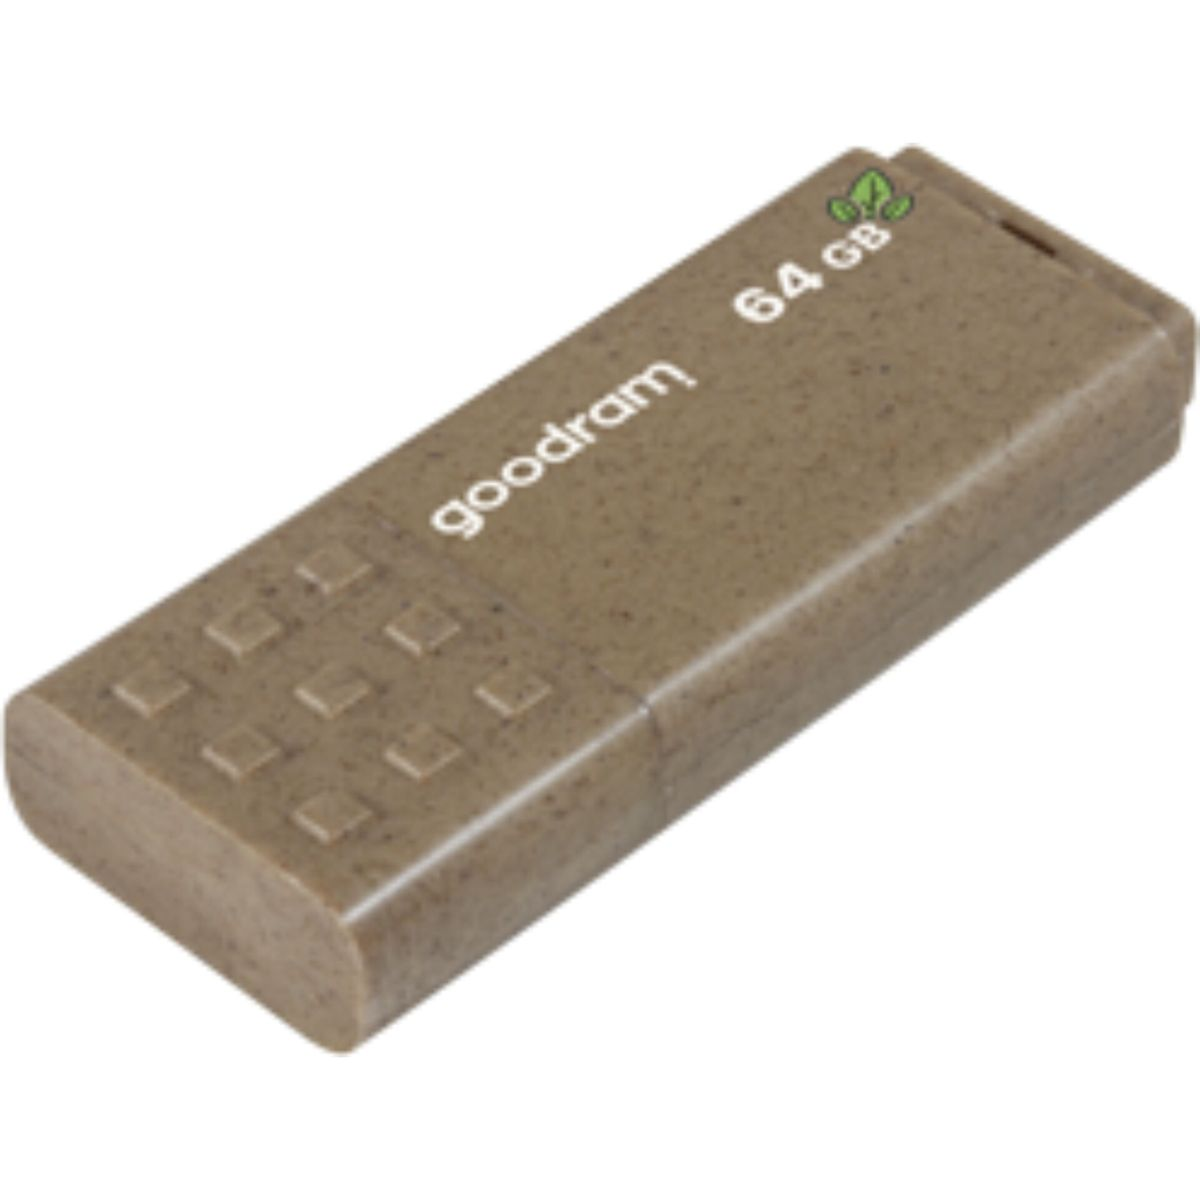 UME3 GOODRAM 64 3.0 (braun, Friendly USB Eco 64GB USB Stick GB)